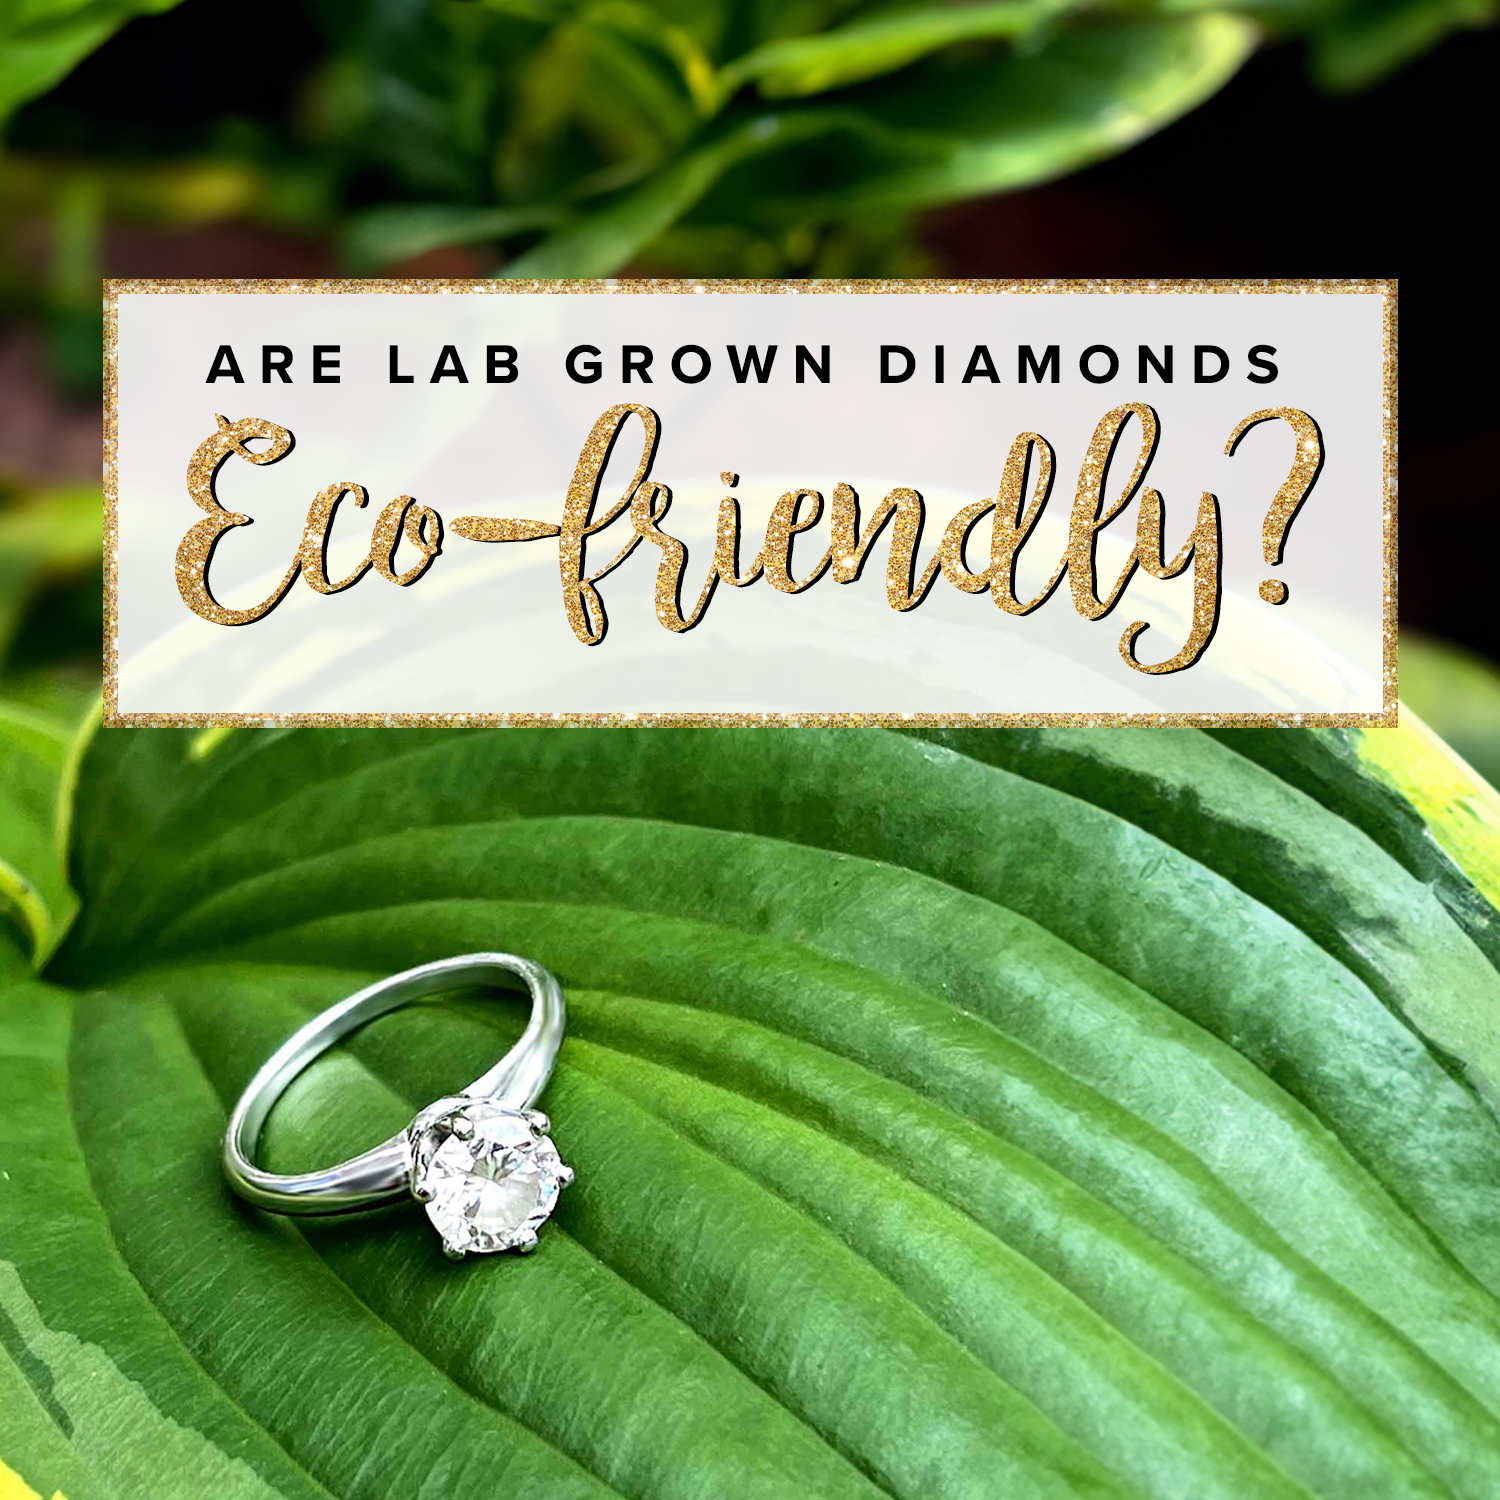 Are lab grown diamonds eco-friendly blog link